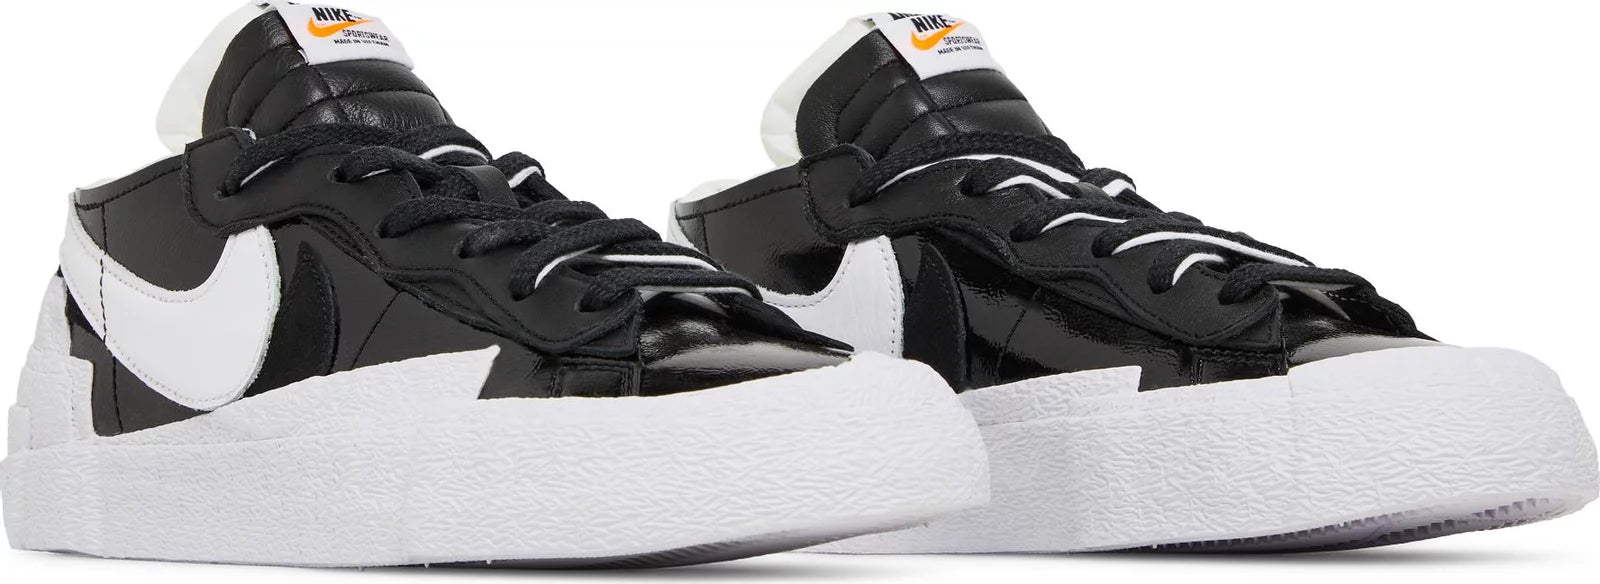 Nike Blazer Low Sacai Black Patent Leather - Paroissesaintefoy Sneakers Sale Online